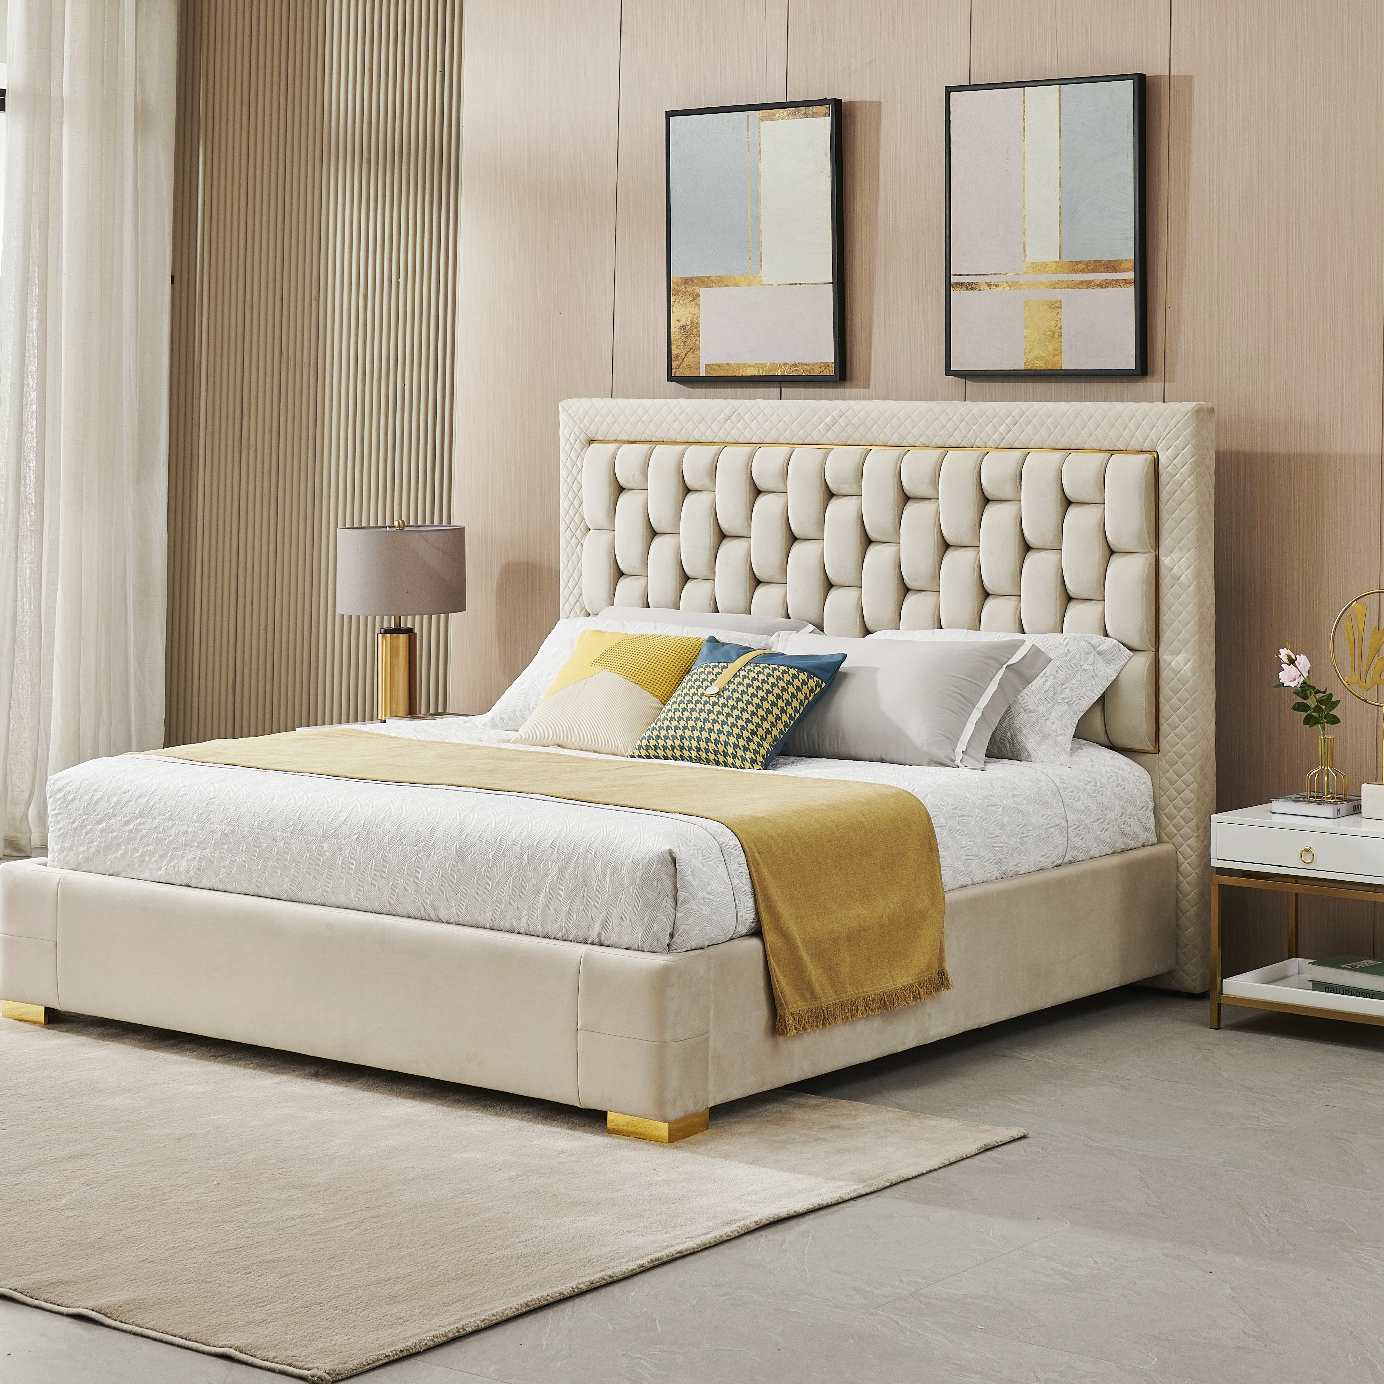 custom king size tufted upholstered bed